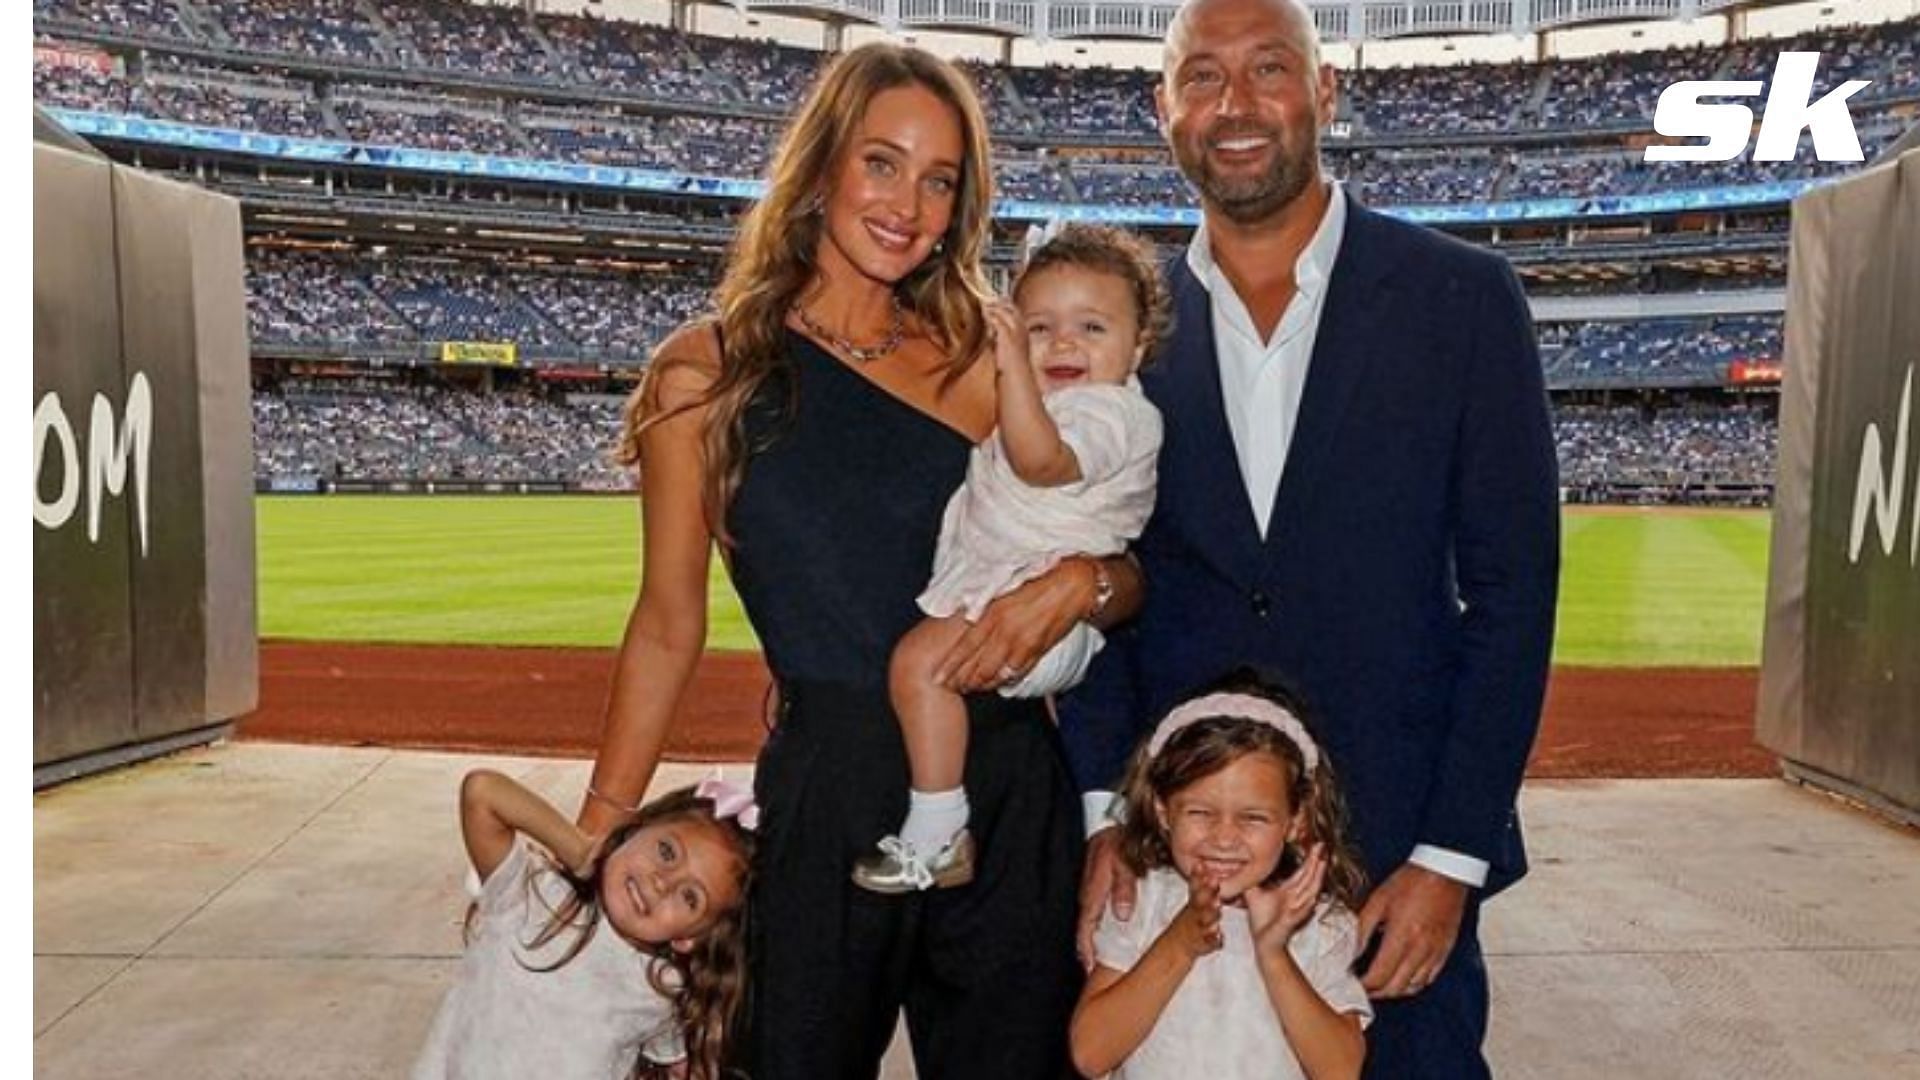 Former Yankees star Derek Jeter, wife welcome first child